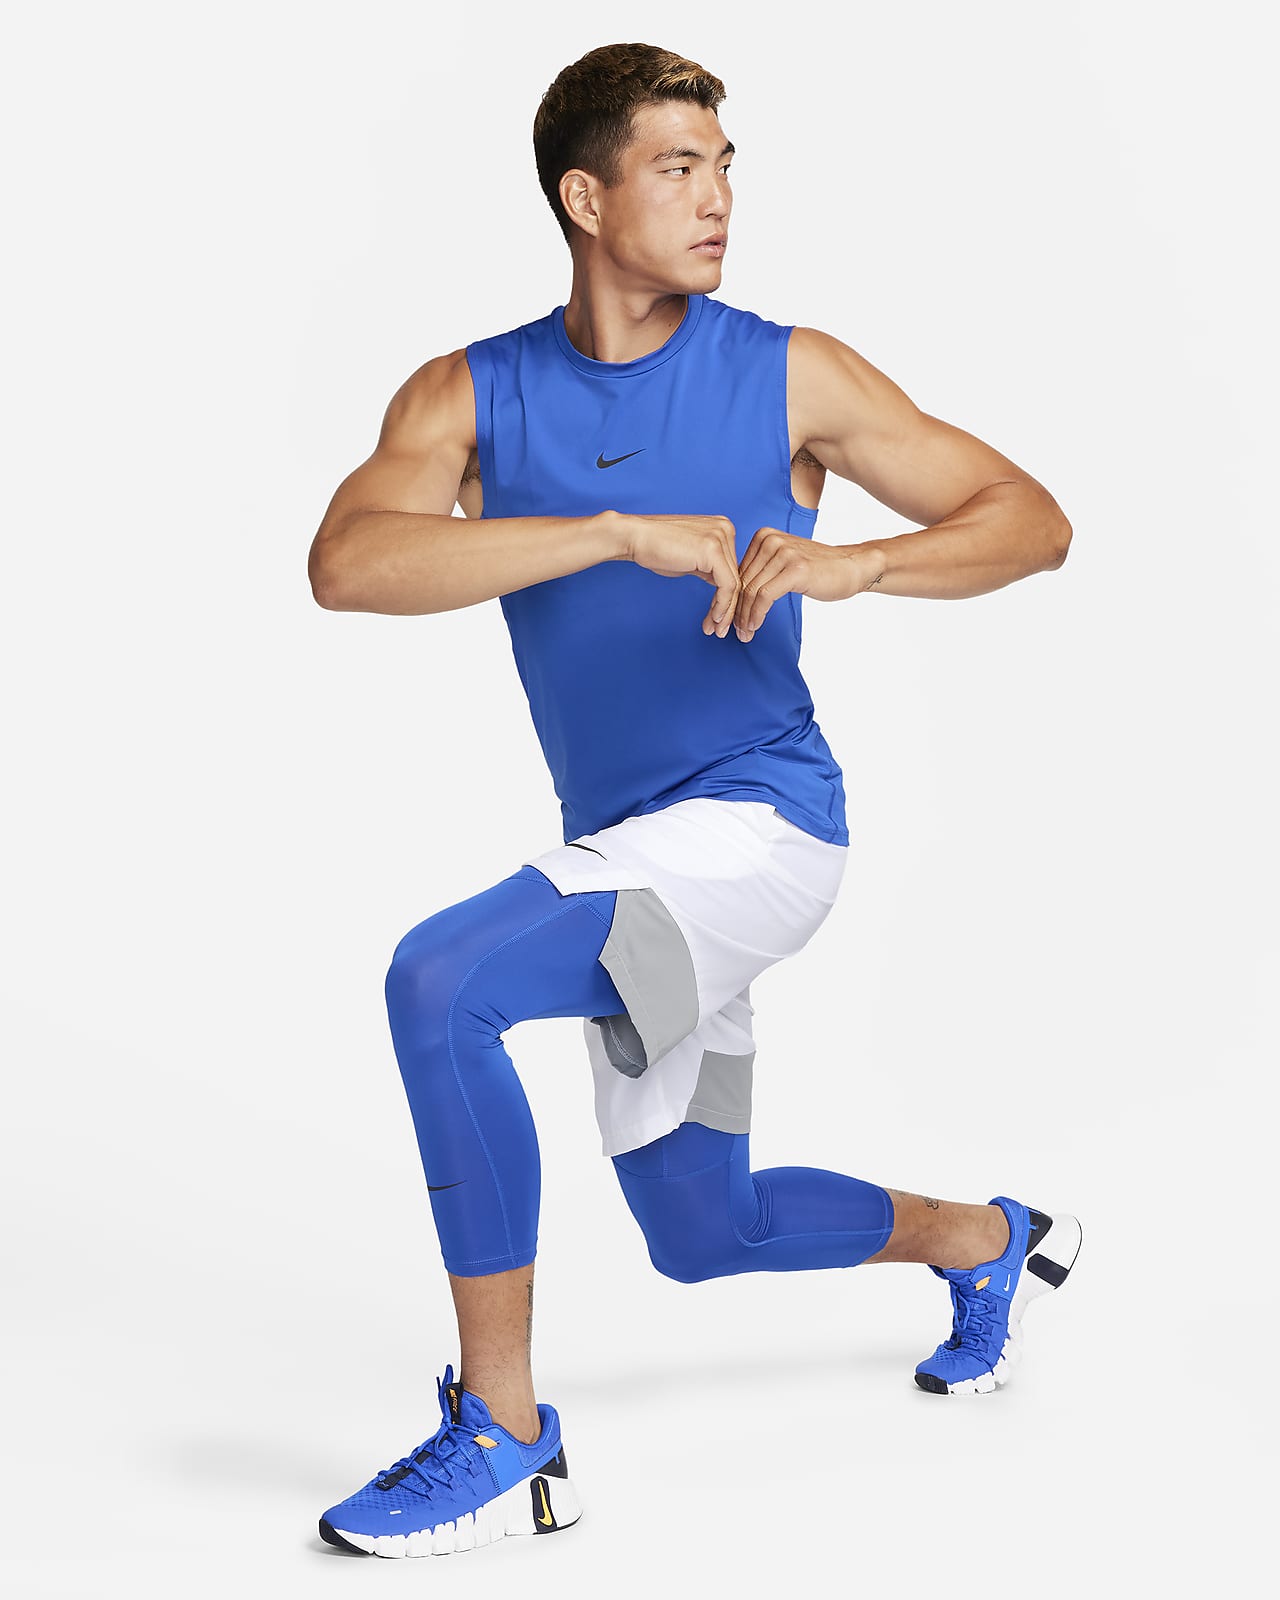 Nike Men's Fall Dri-FIT Pro Slim Sleeveless Top